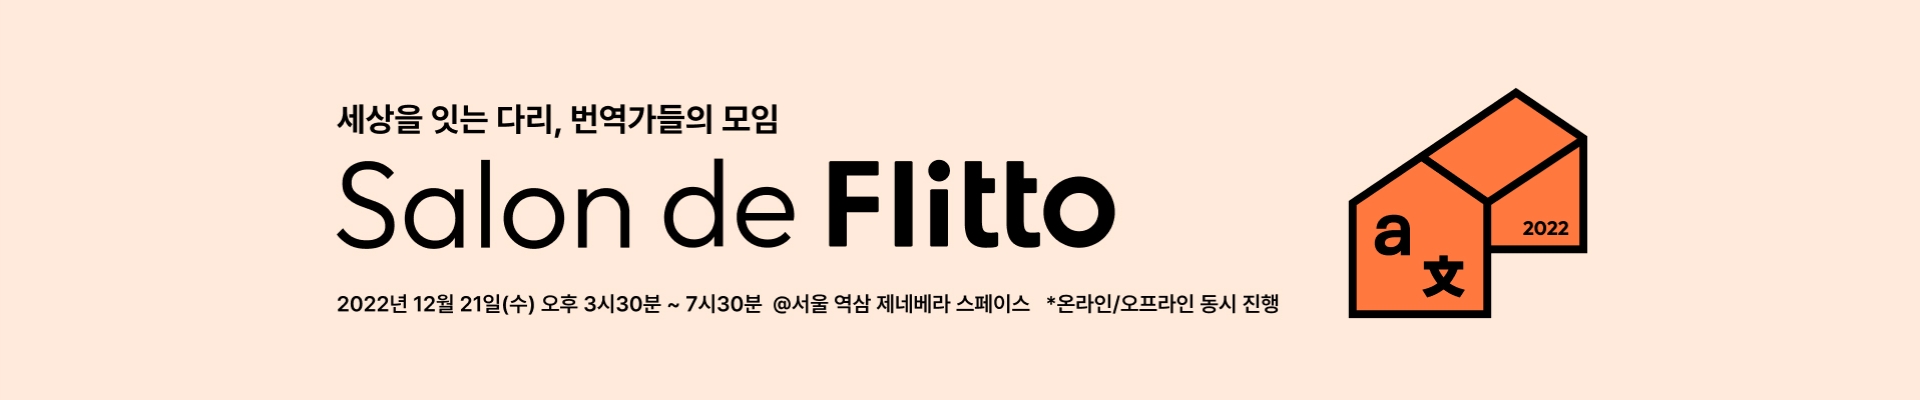 Salon de Flitto 2022 - 번역가 세미나